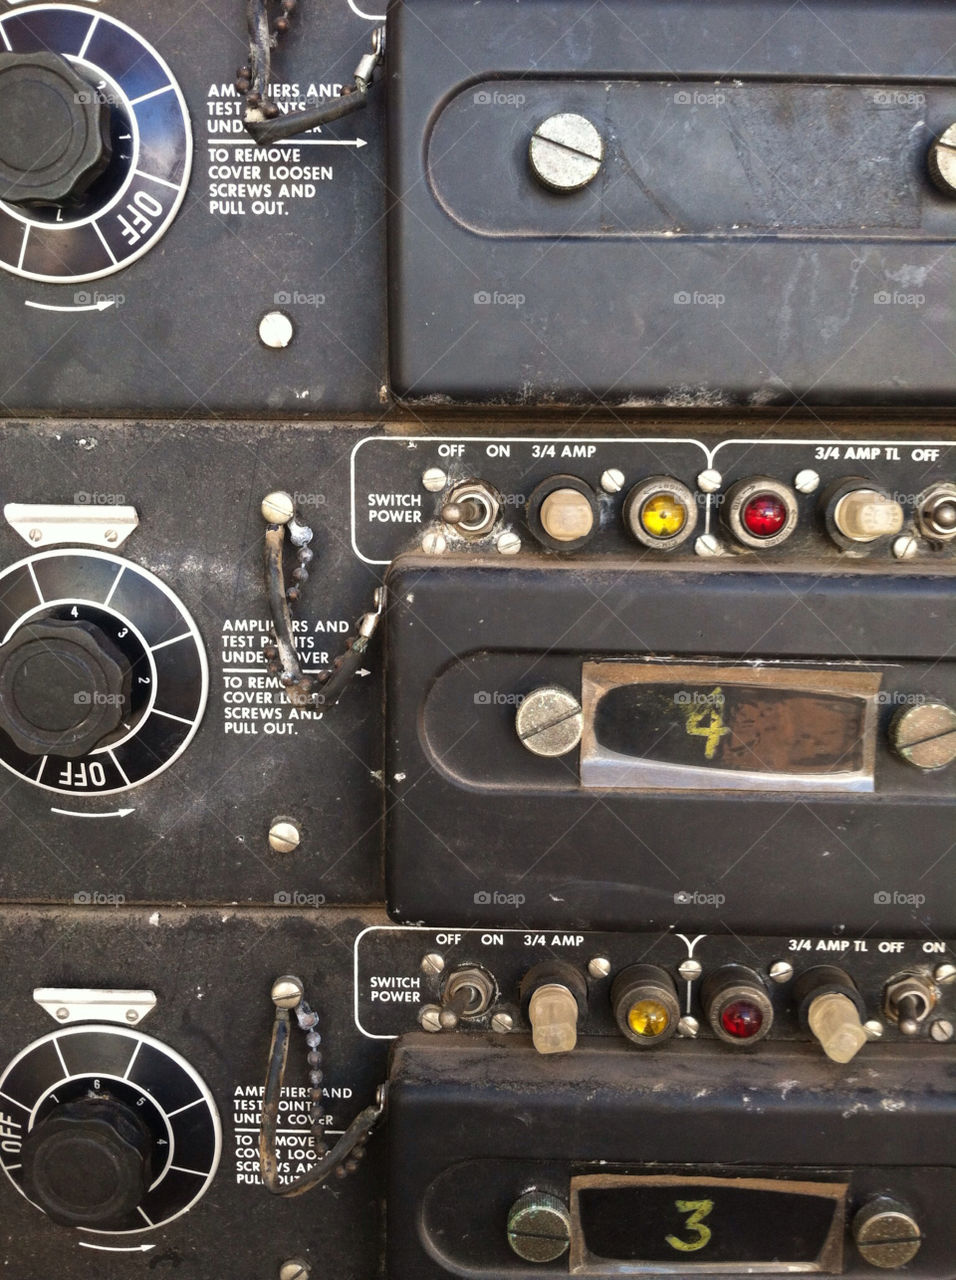 An old retro Military communication radio.